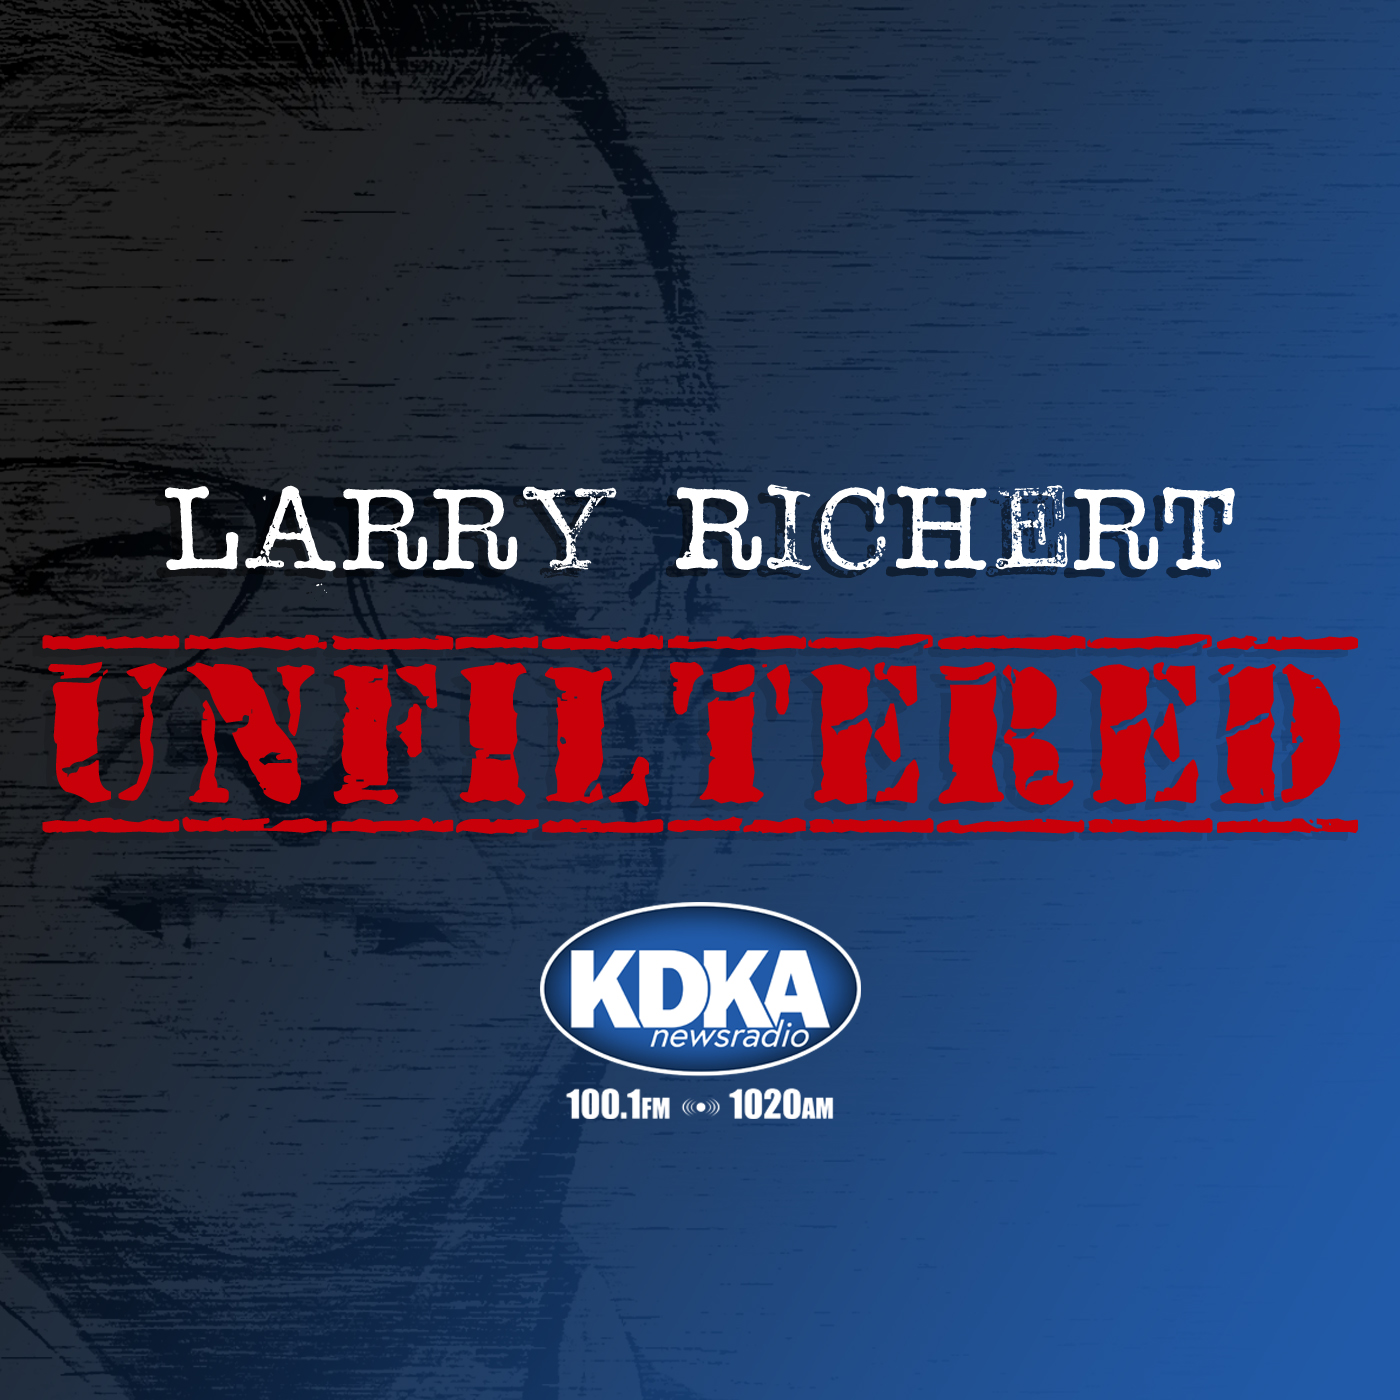 Podcast Episode #49 Larry Richert: Unfiltered